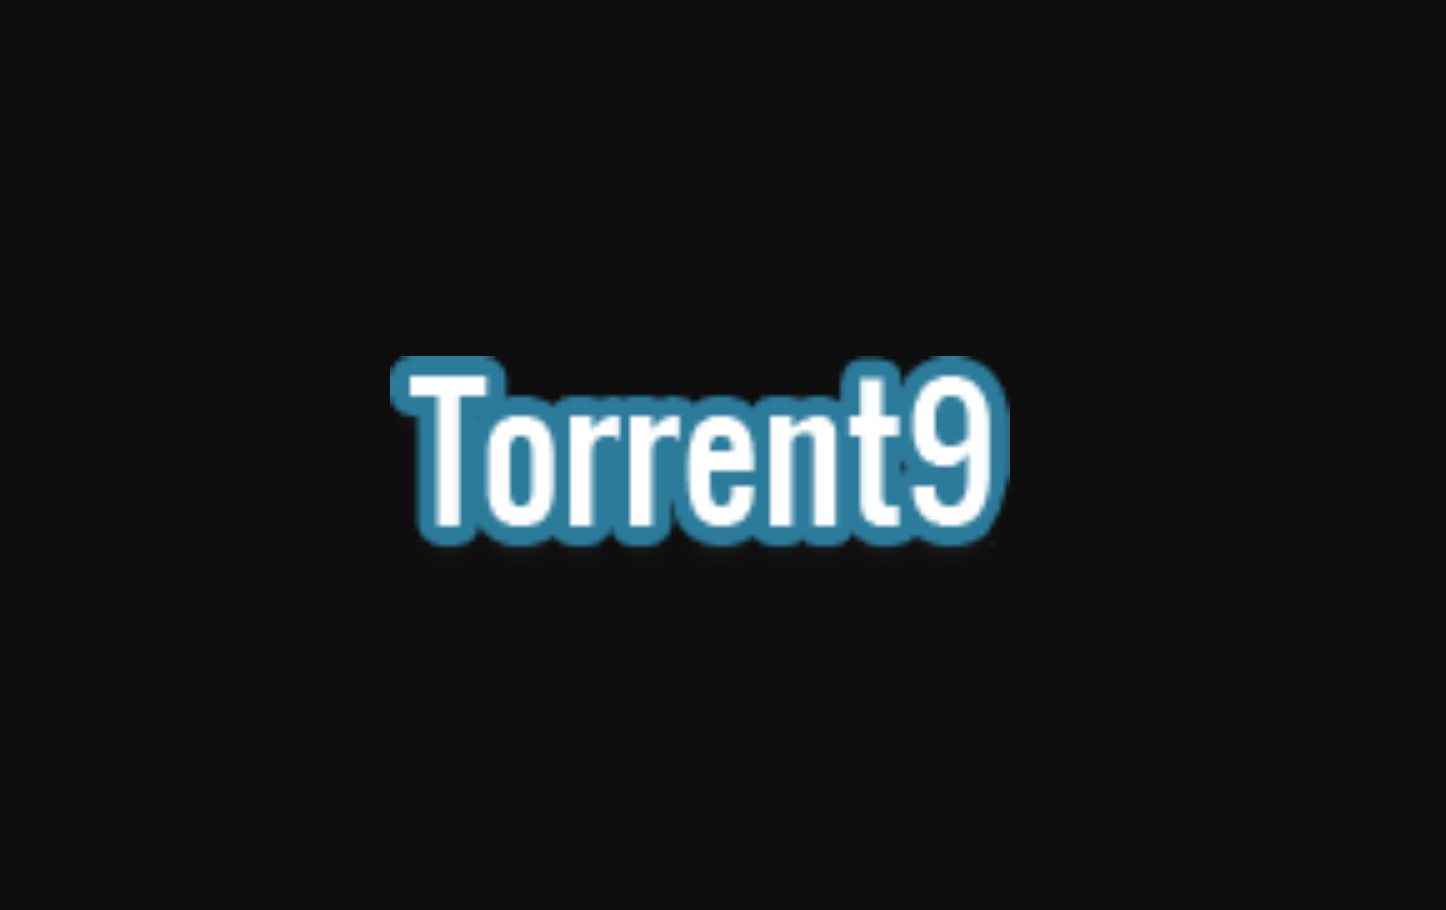 torrent9 logo